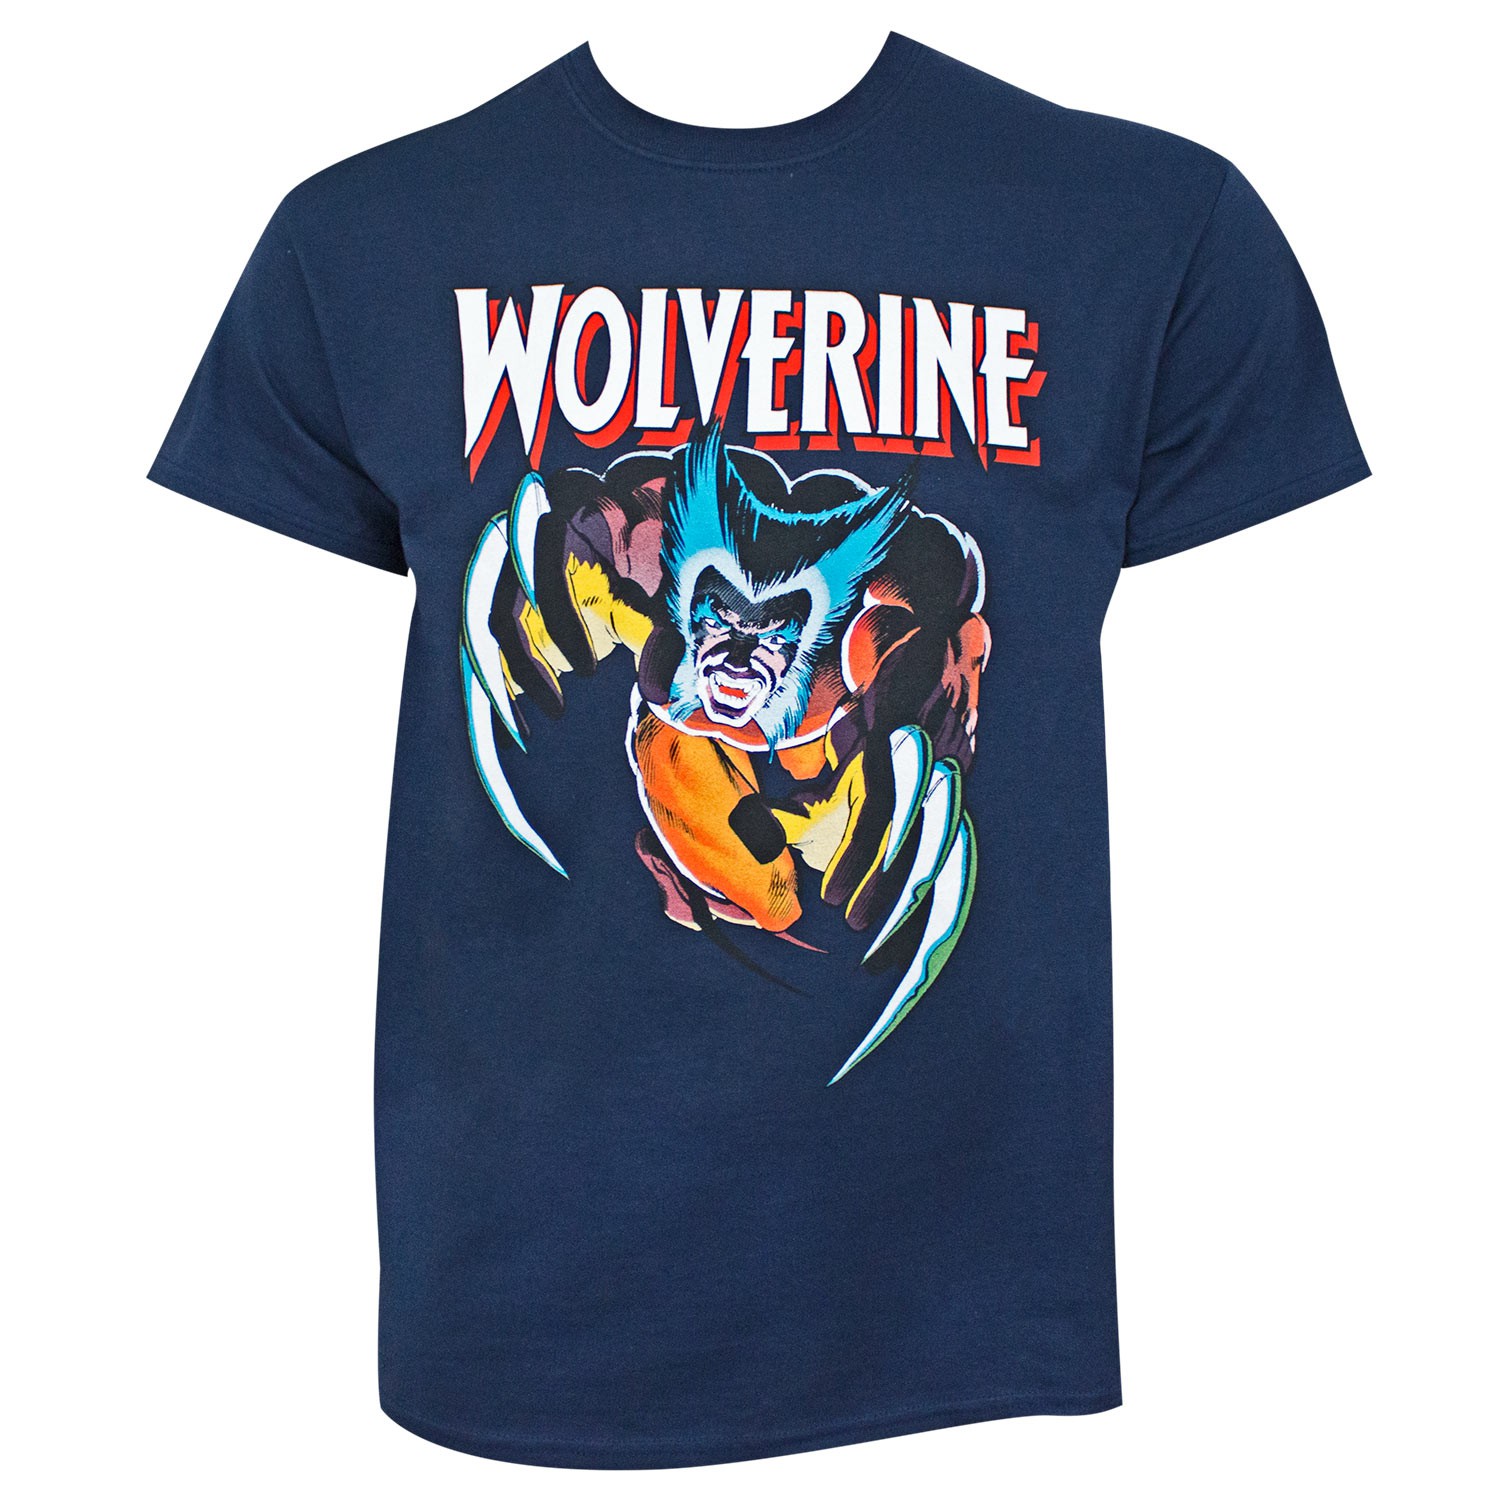 Wolverine Claw Attack Navy Blue Tee Shirt